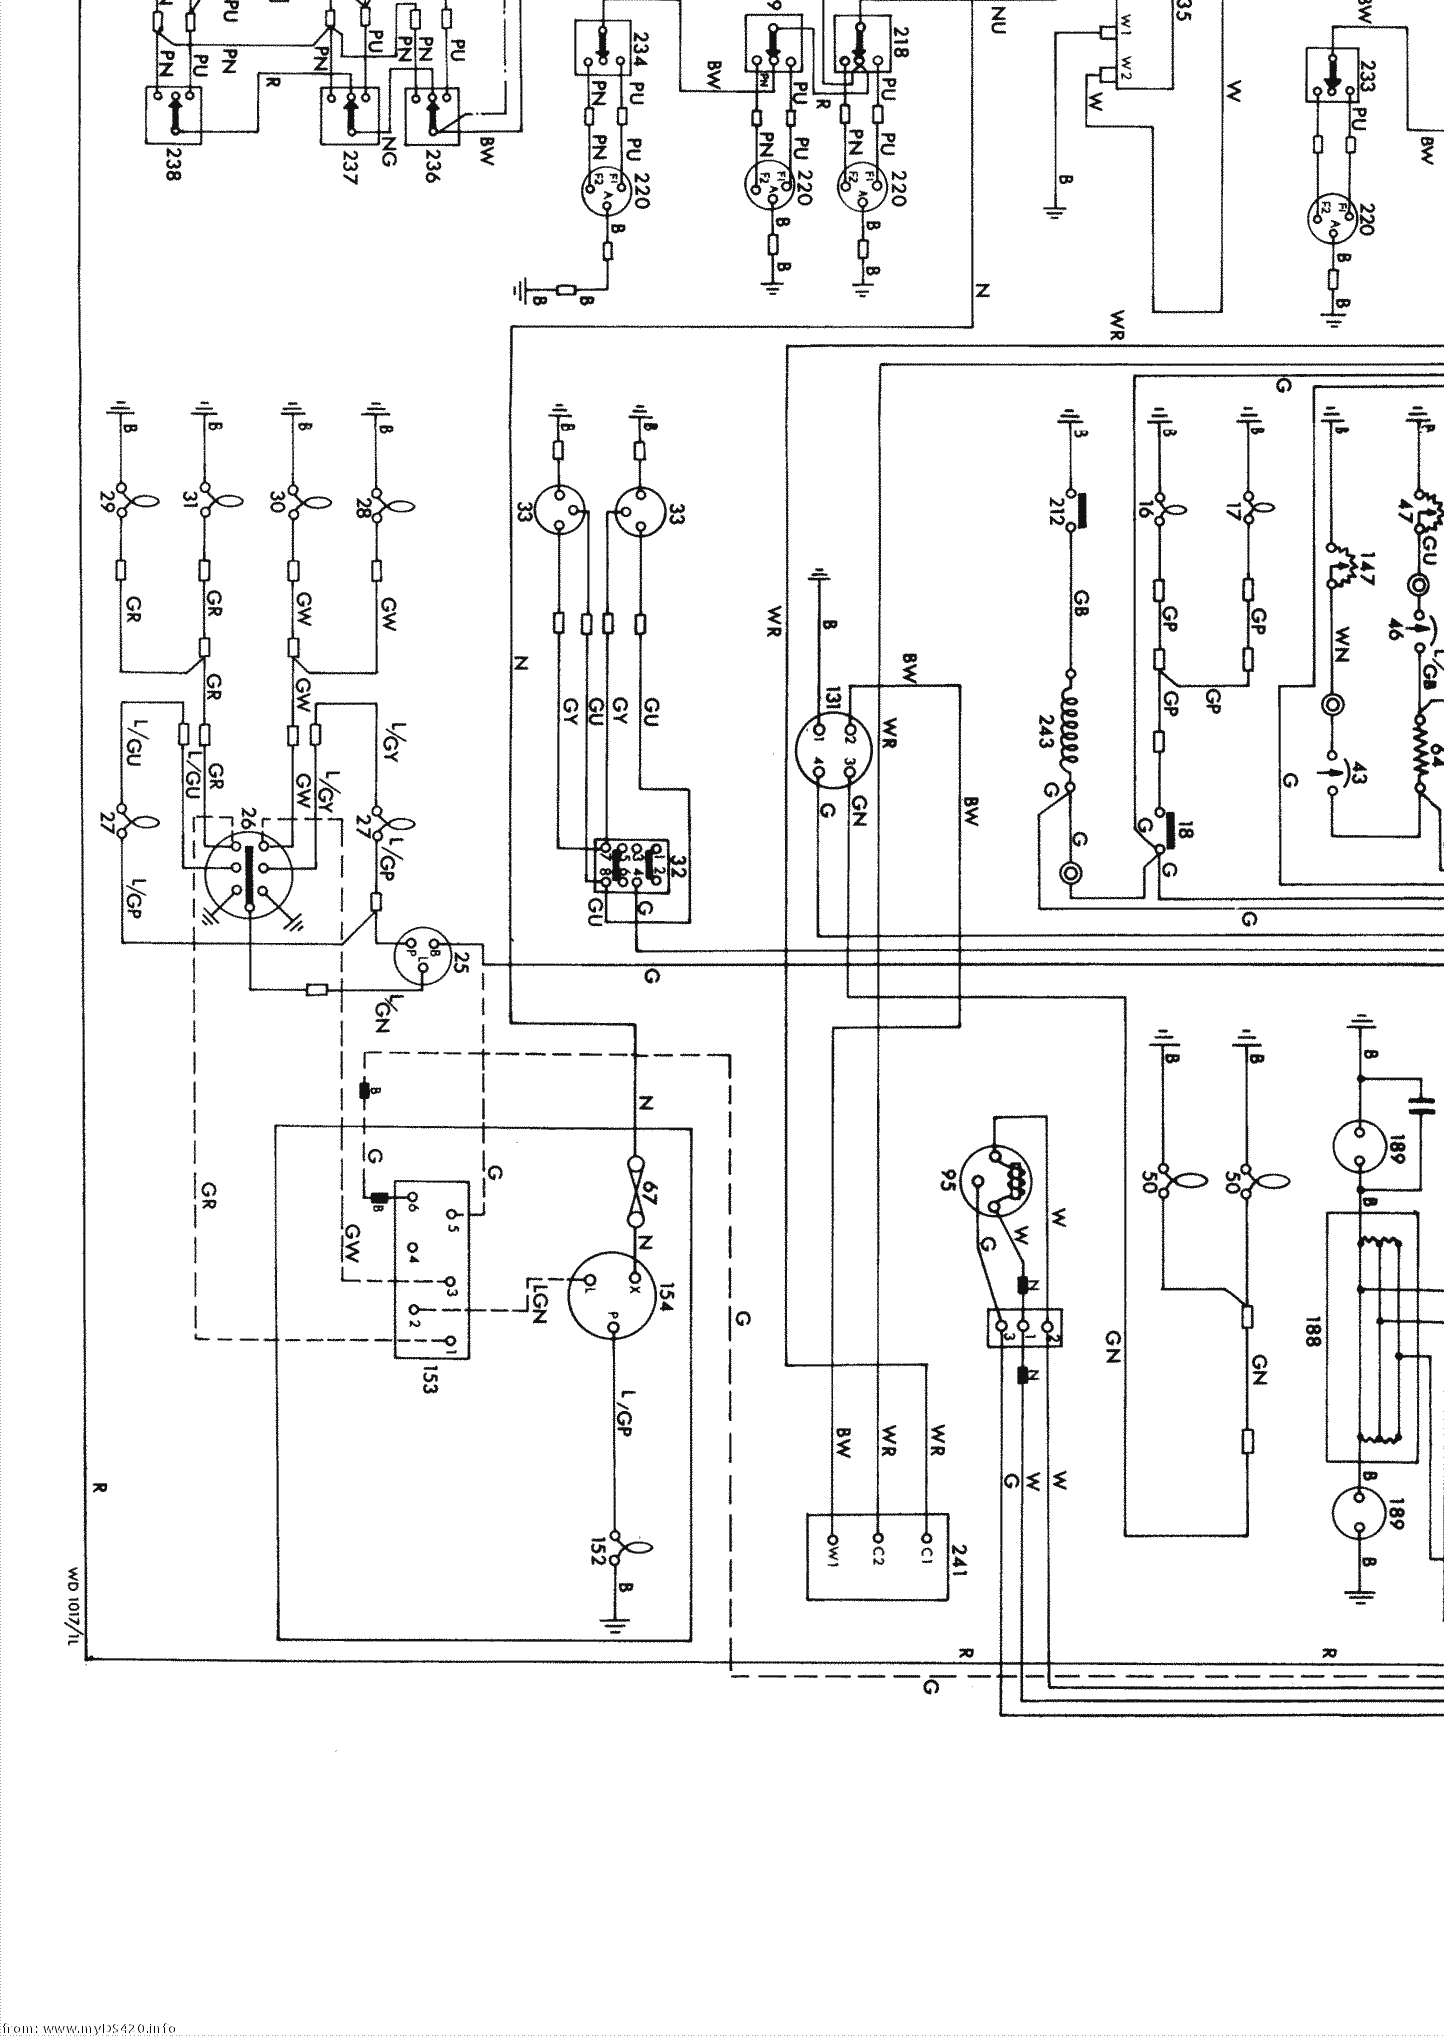 wiring diagram medium res. A4 SE (1970)